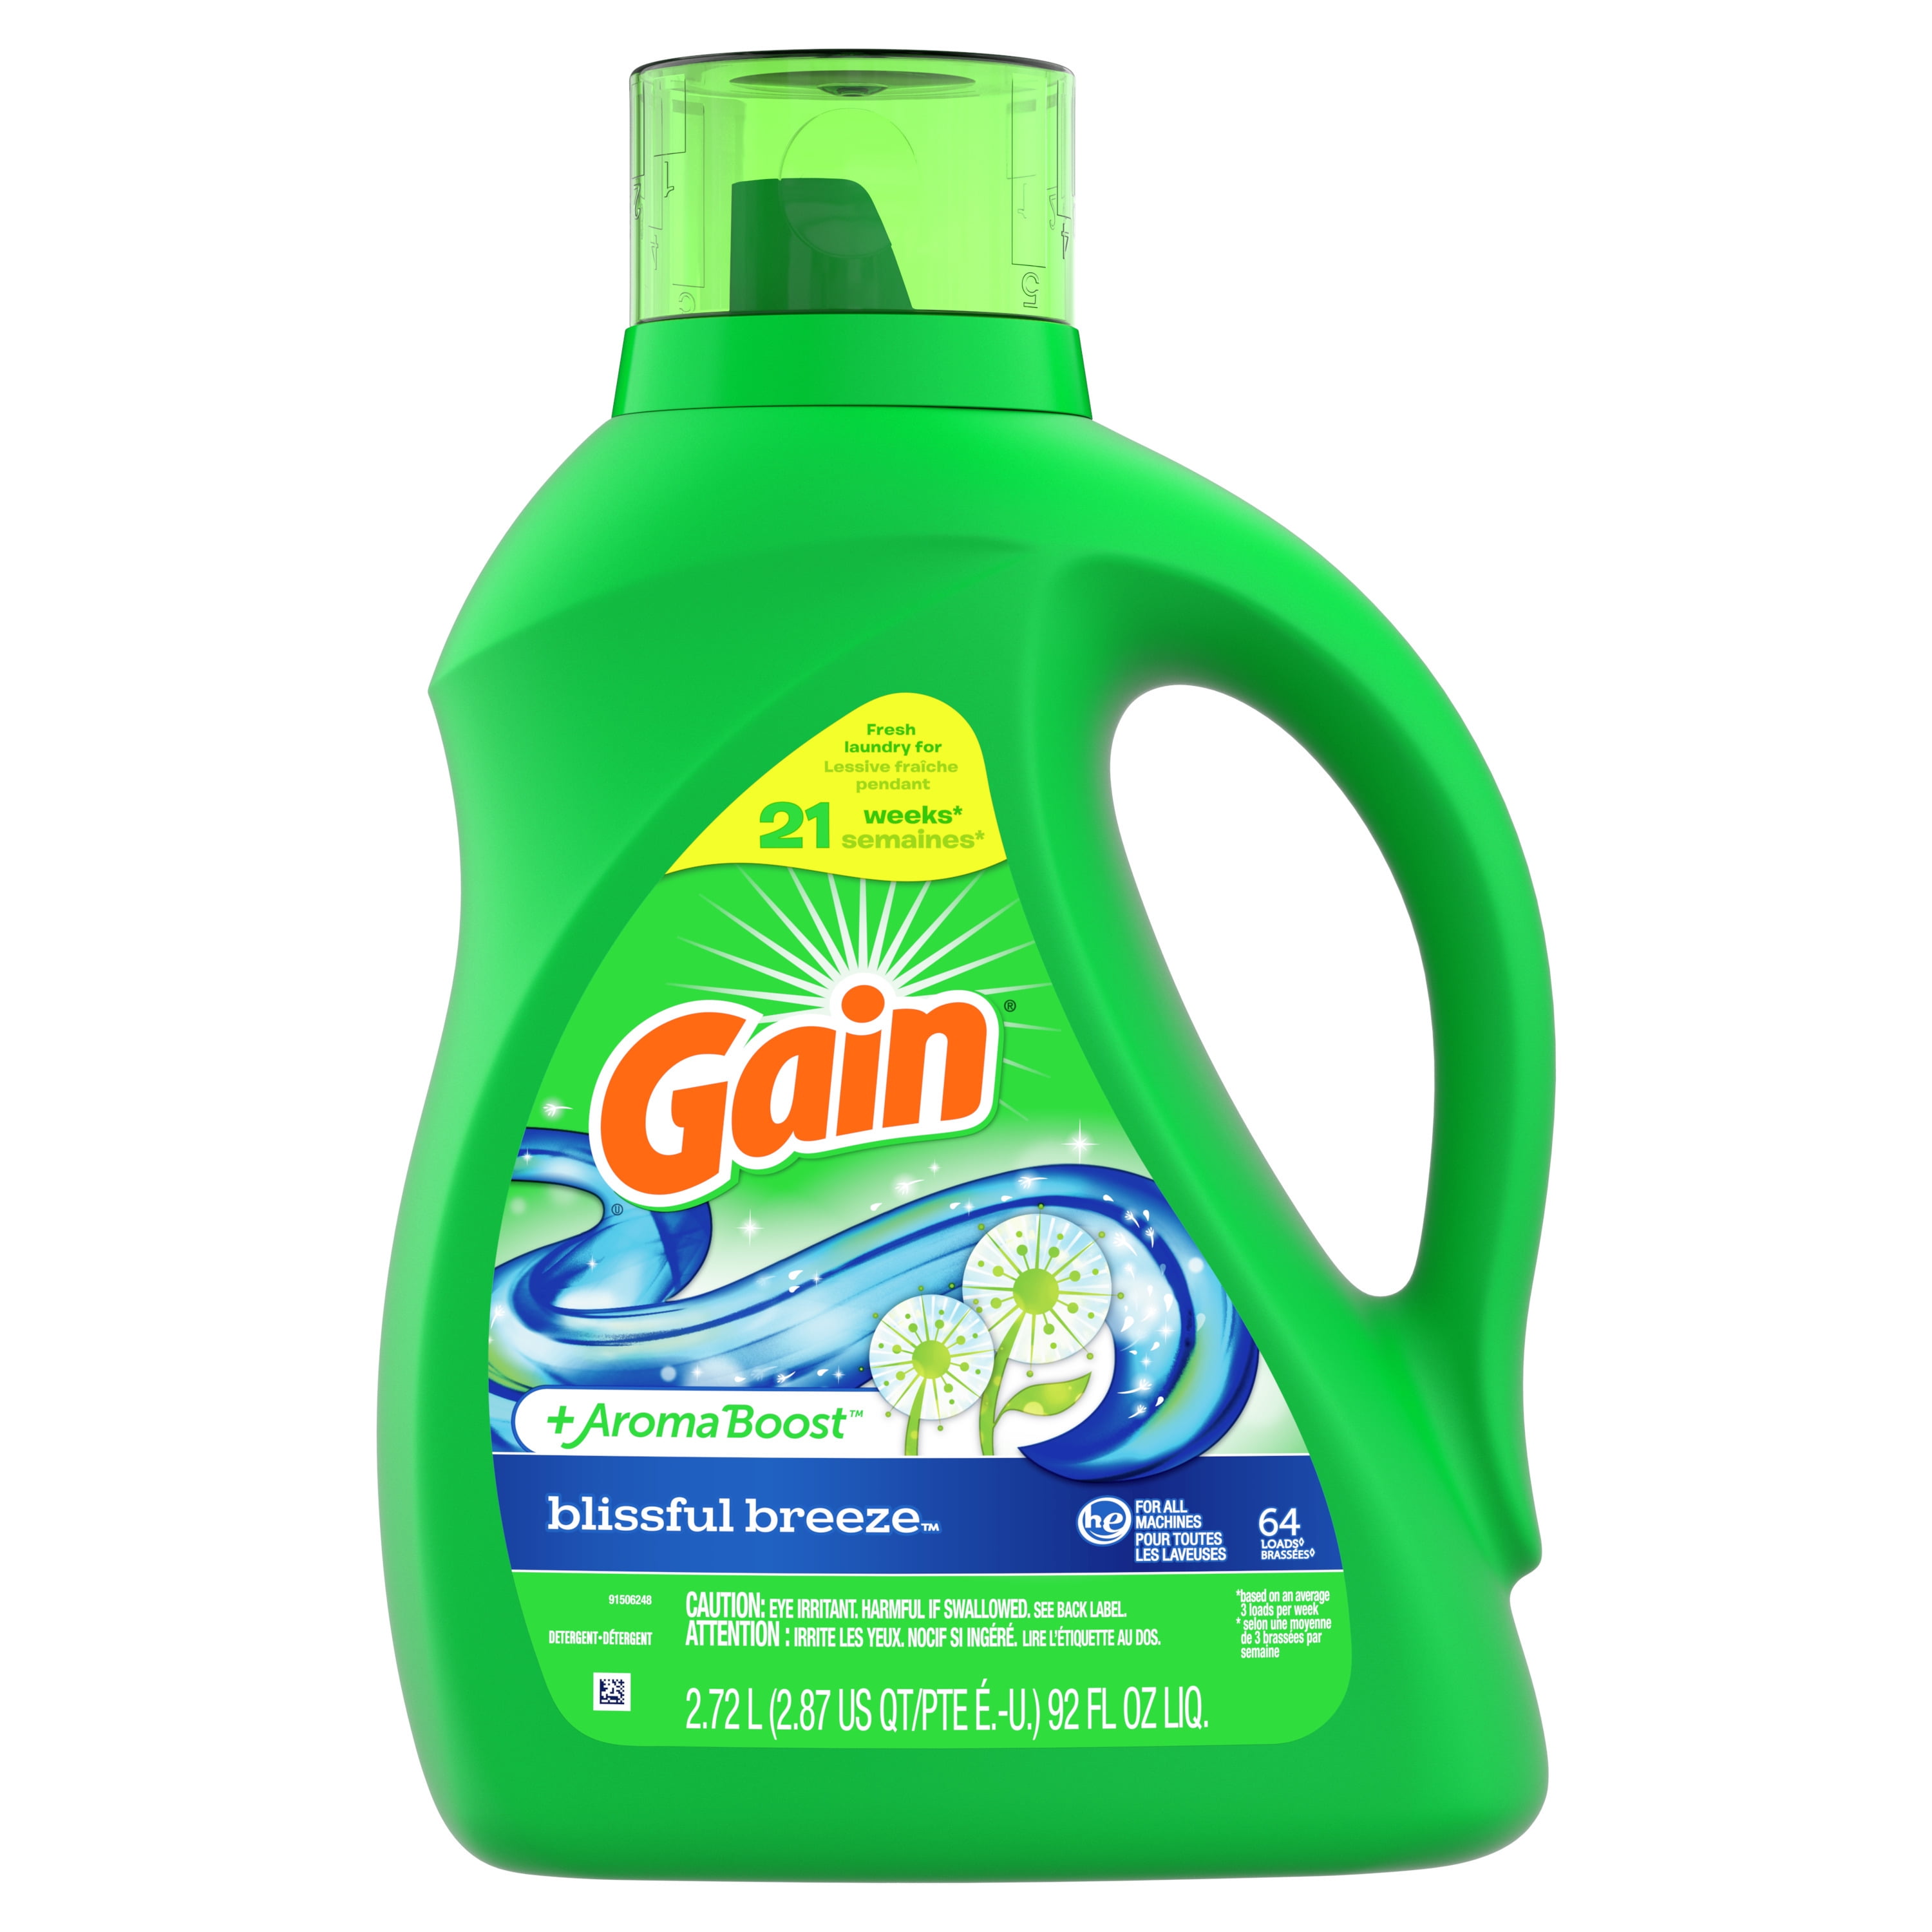 Gain + Aroma Boost Liquid Laundry Detergent, Blissful Breeze Scent, 64 Loads, 92 fl oz